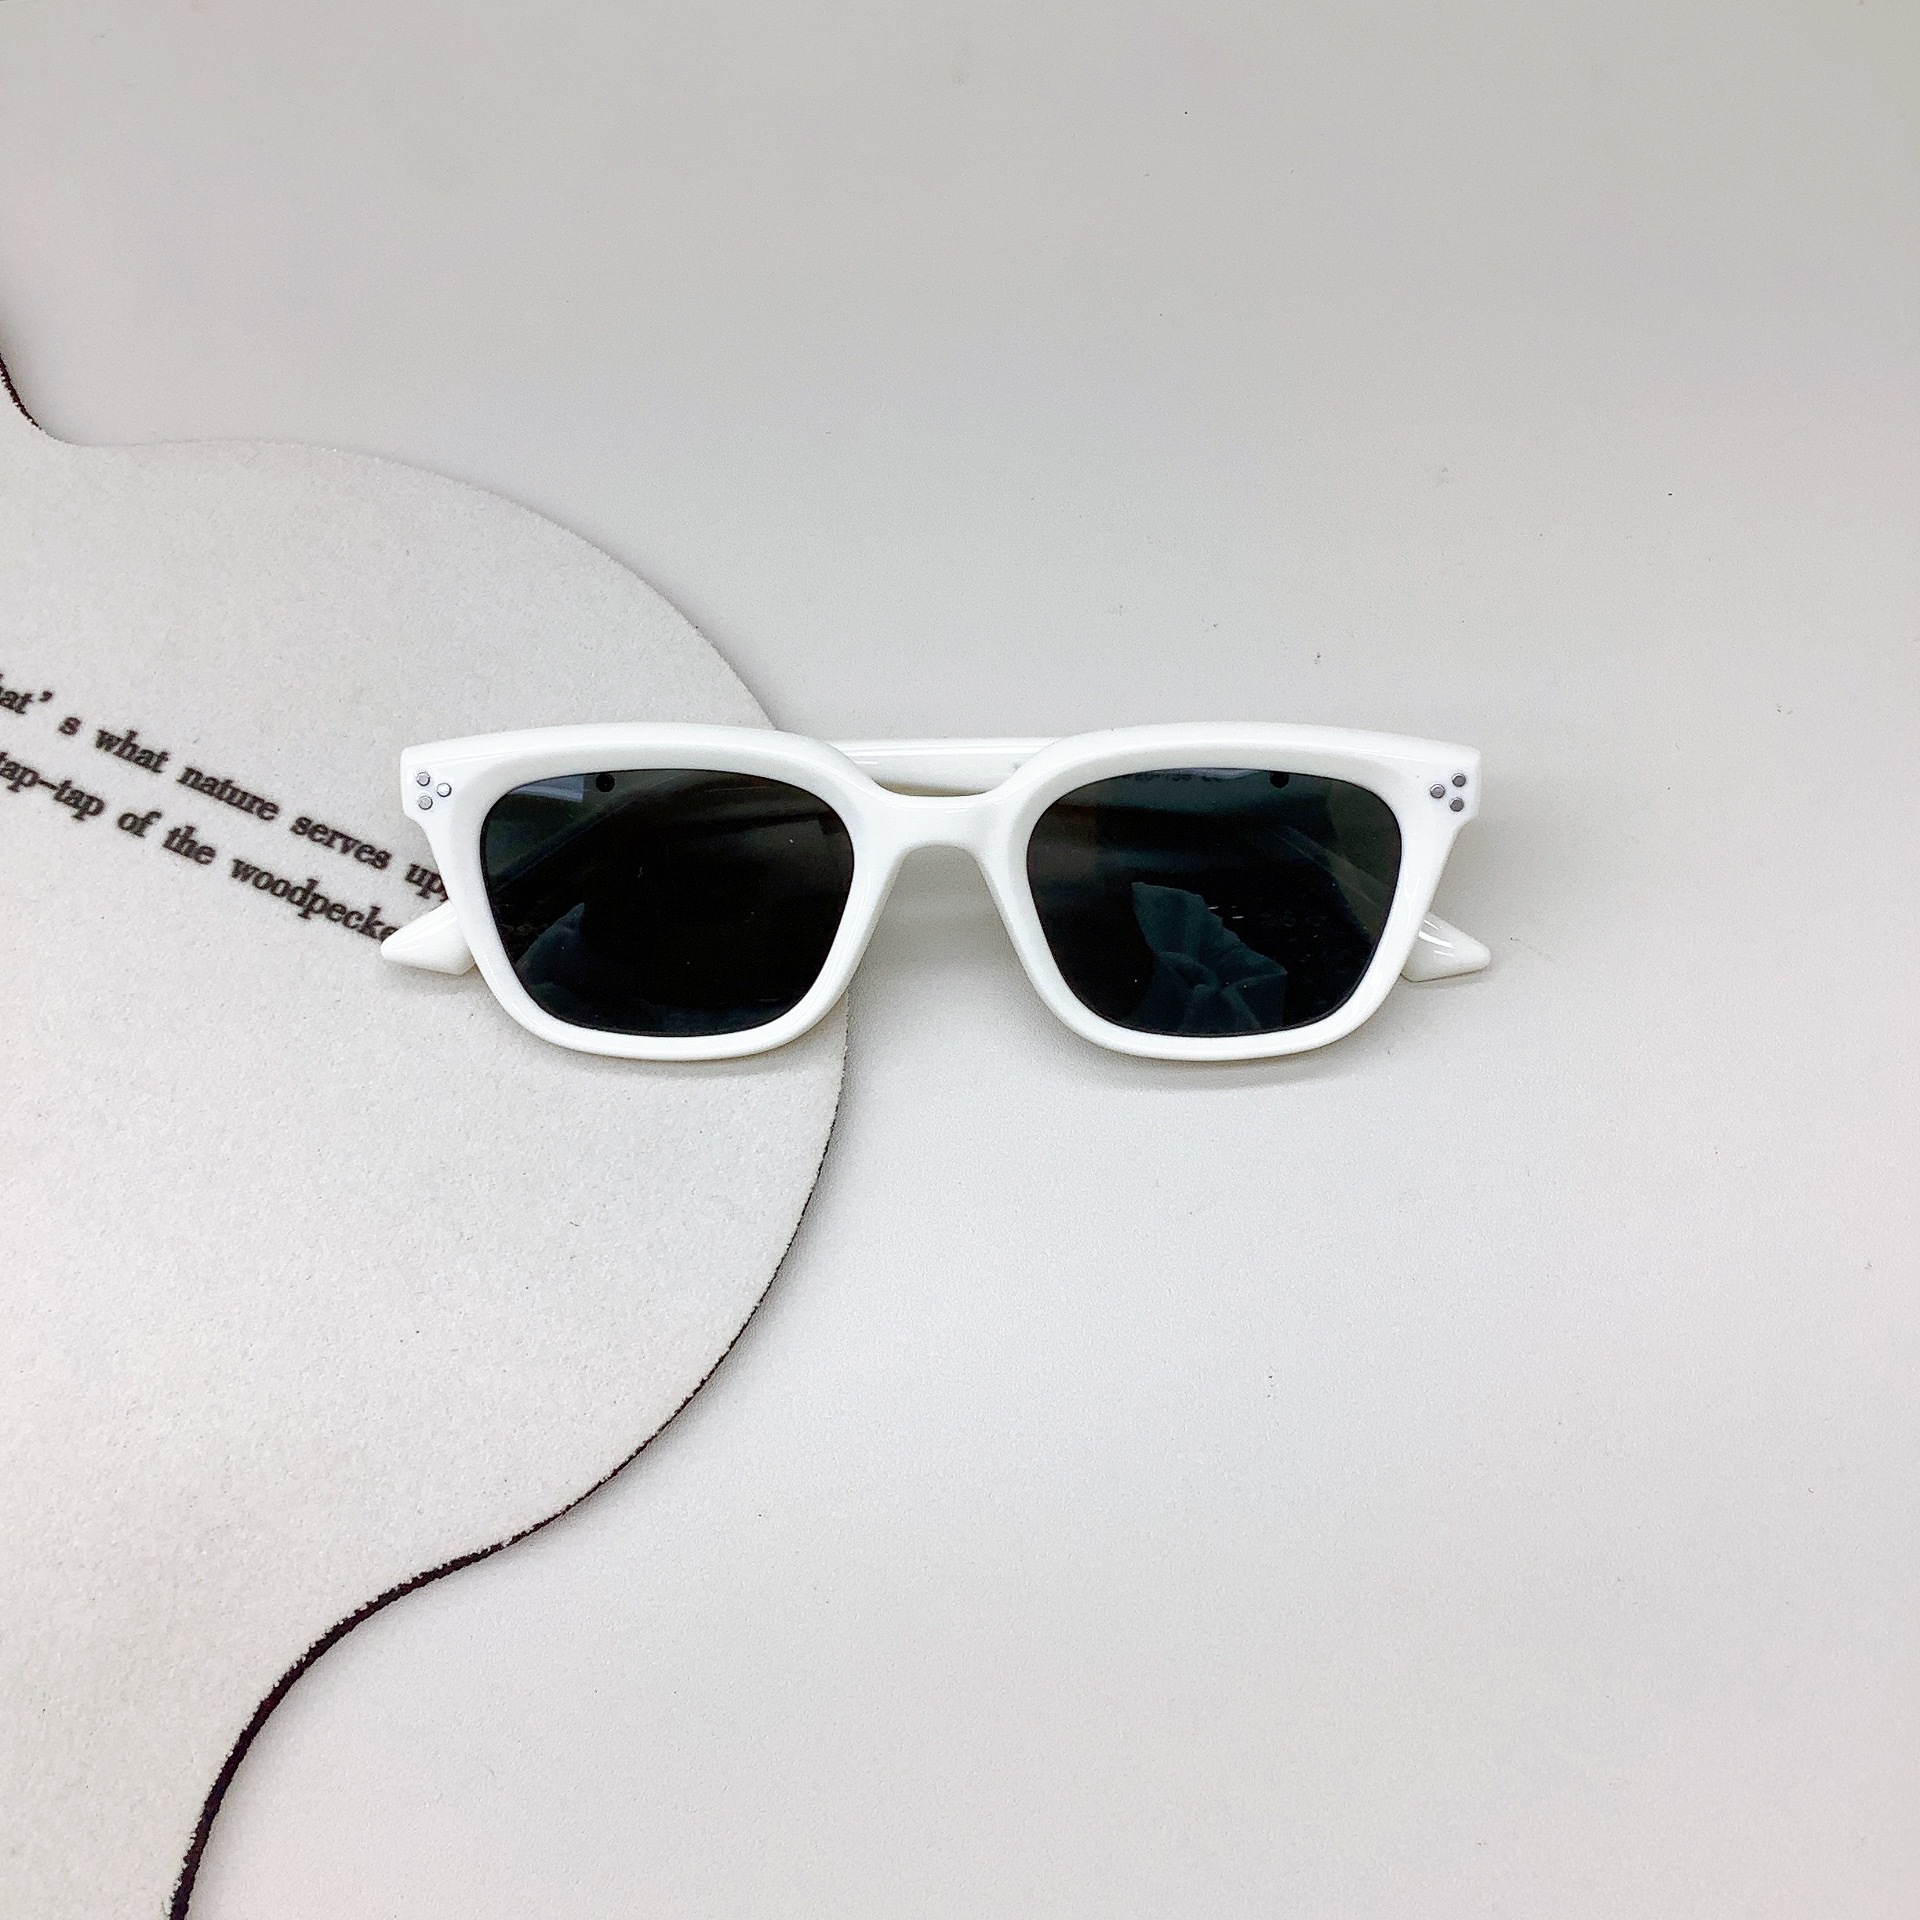 New Fashion Silicone Polarized Kids Sunglasses Retro Square Frame Girls Sunglasses UV Protection Boys Glasses